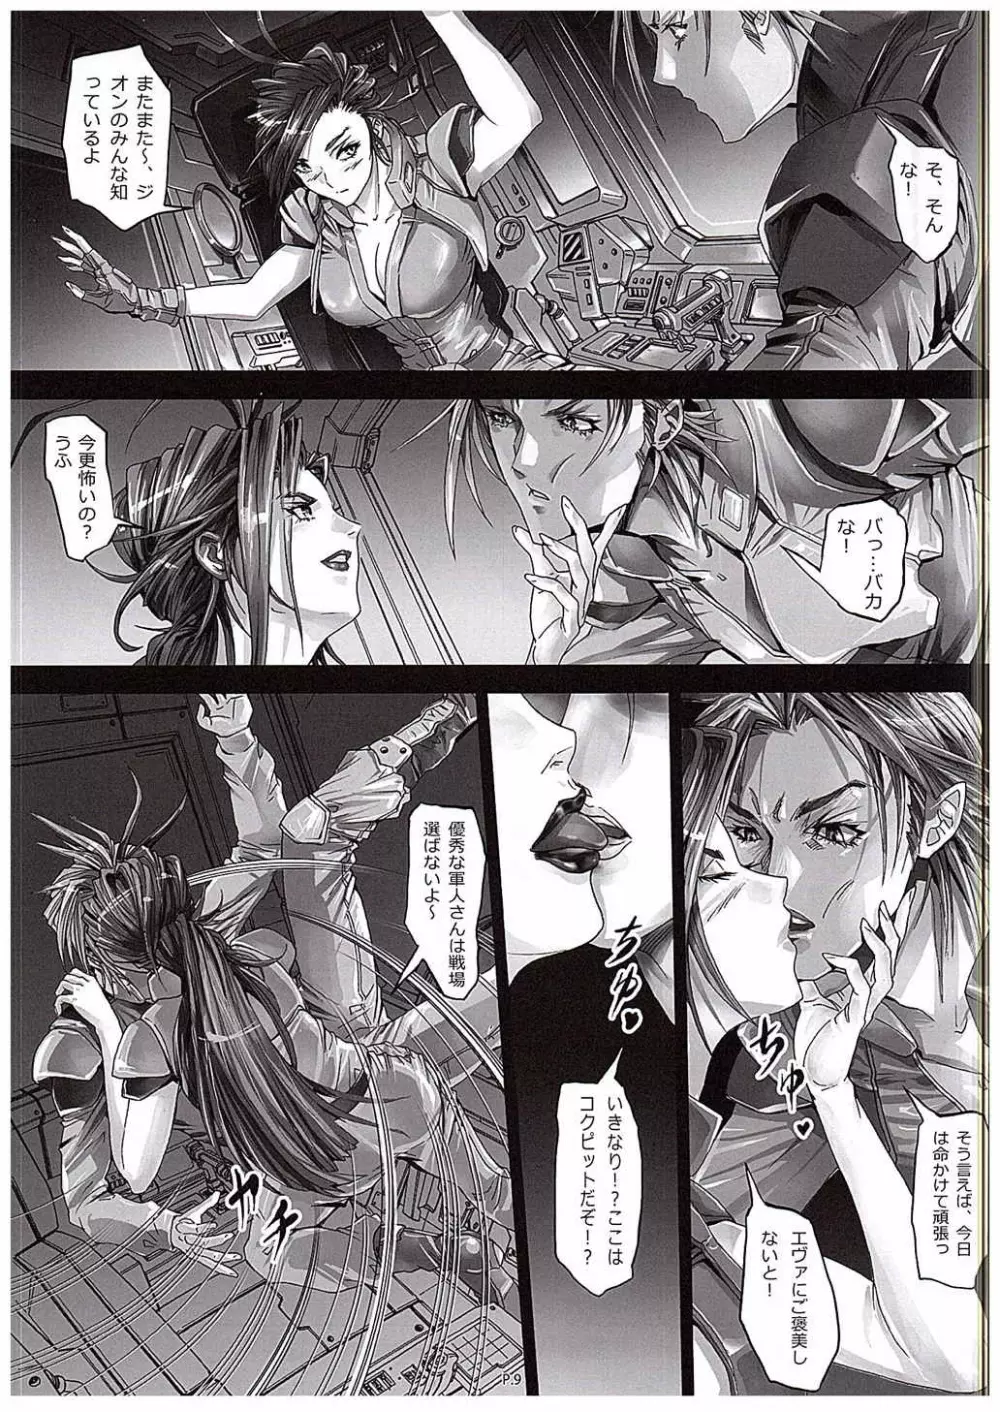 Zeon Saga Vanishing Knight - page10